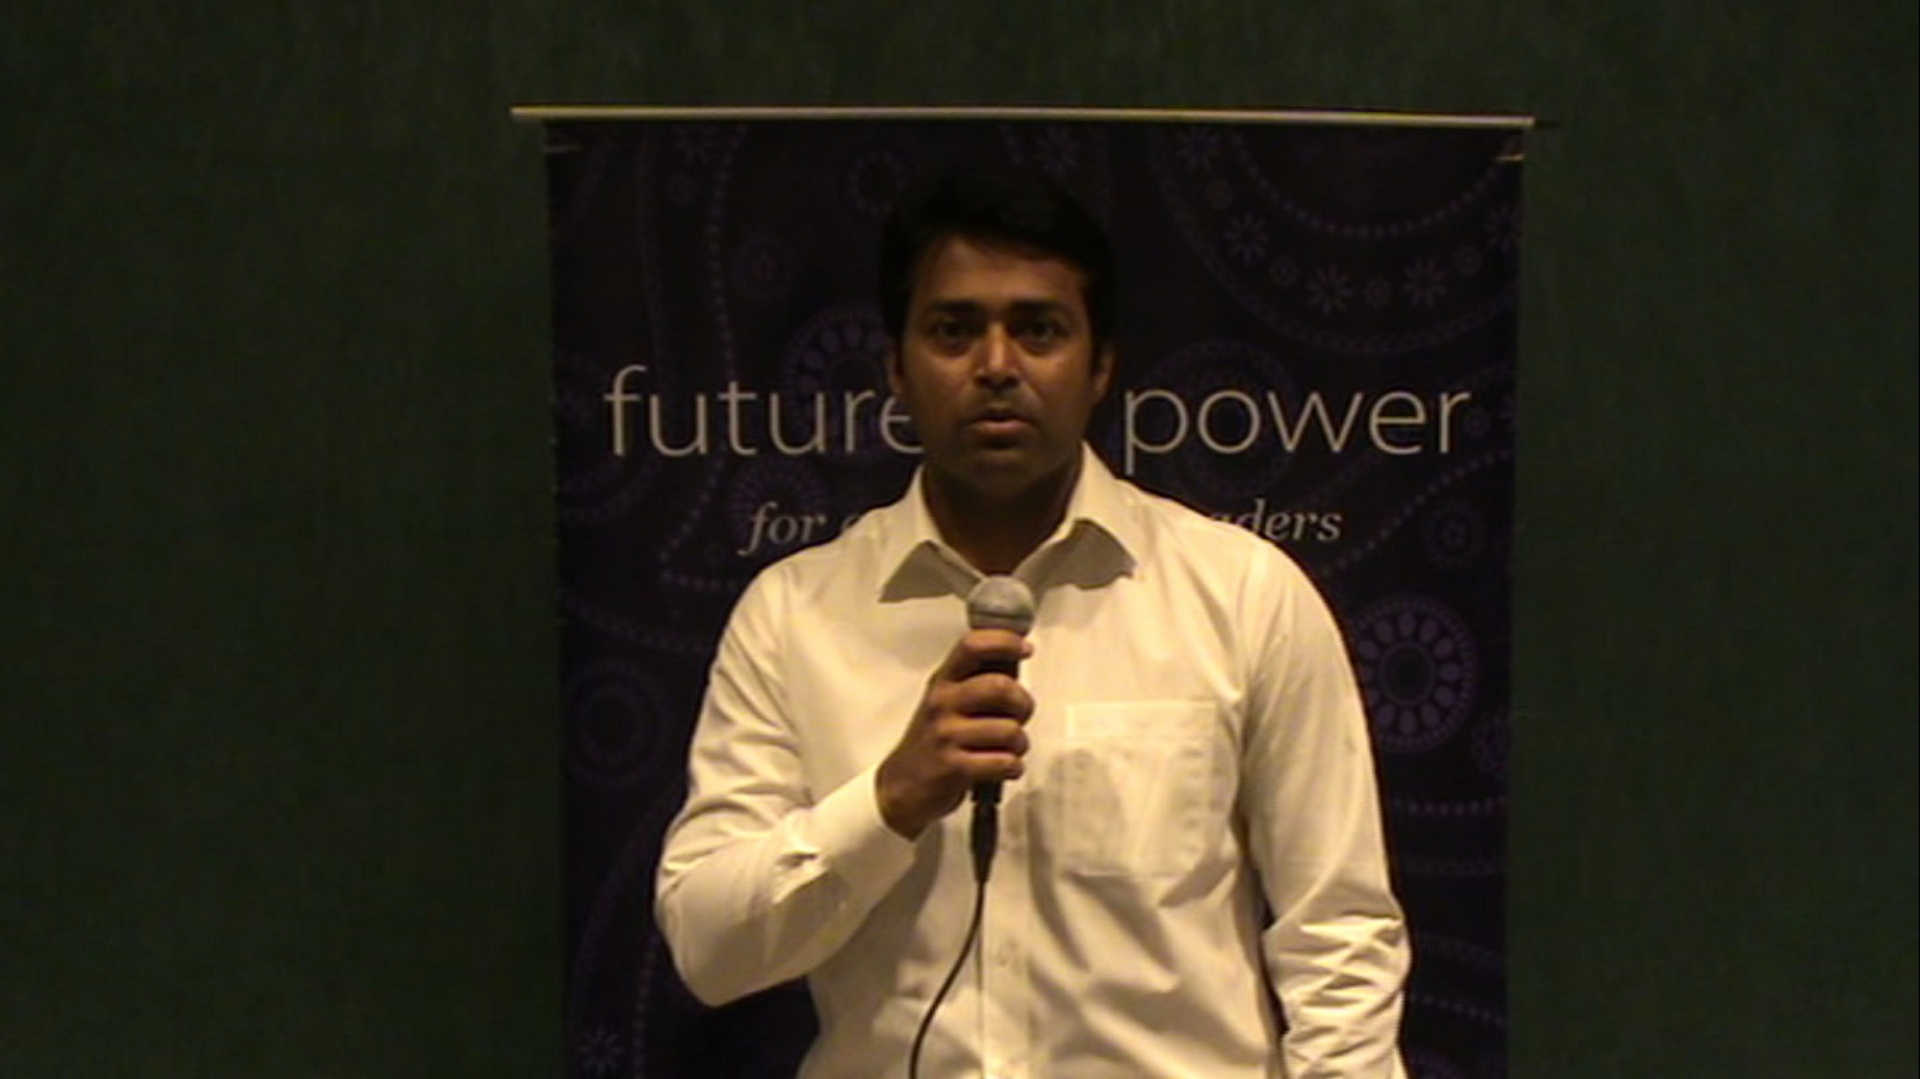 Brahma kumaris future of power -2